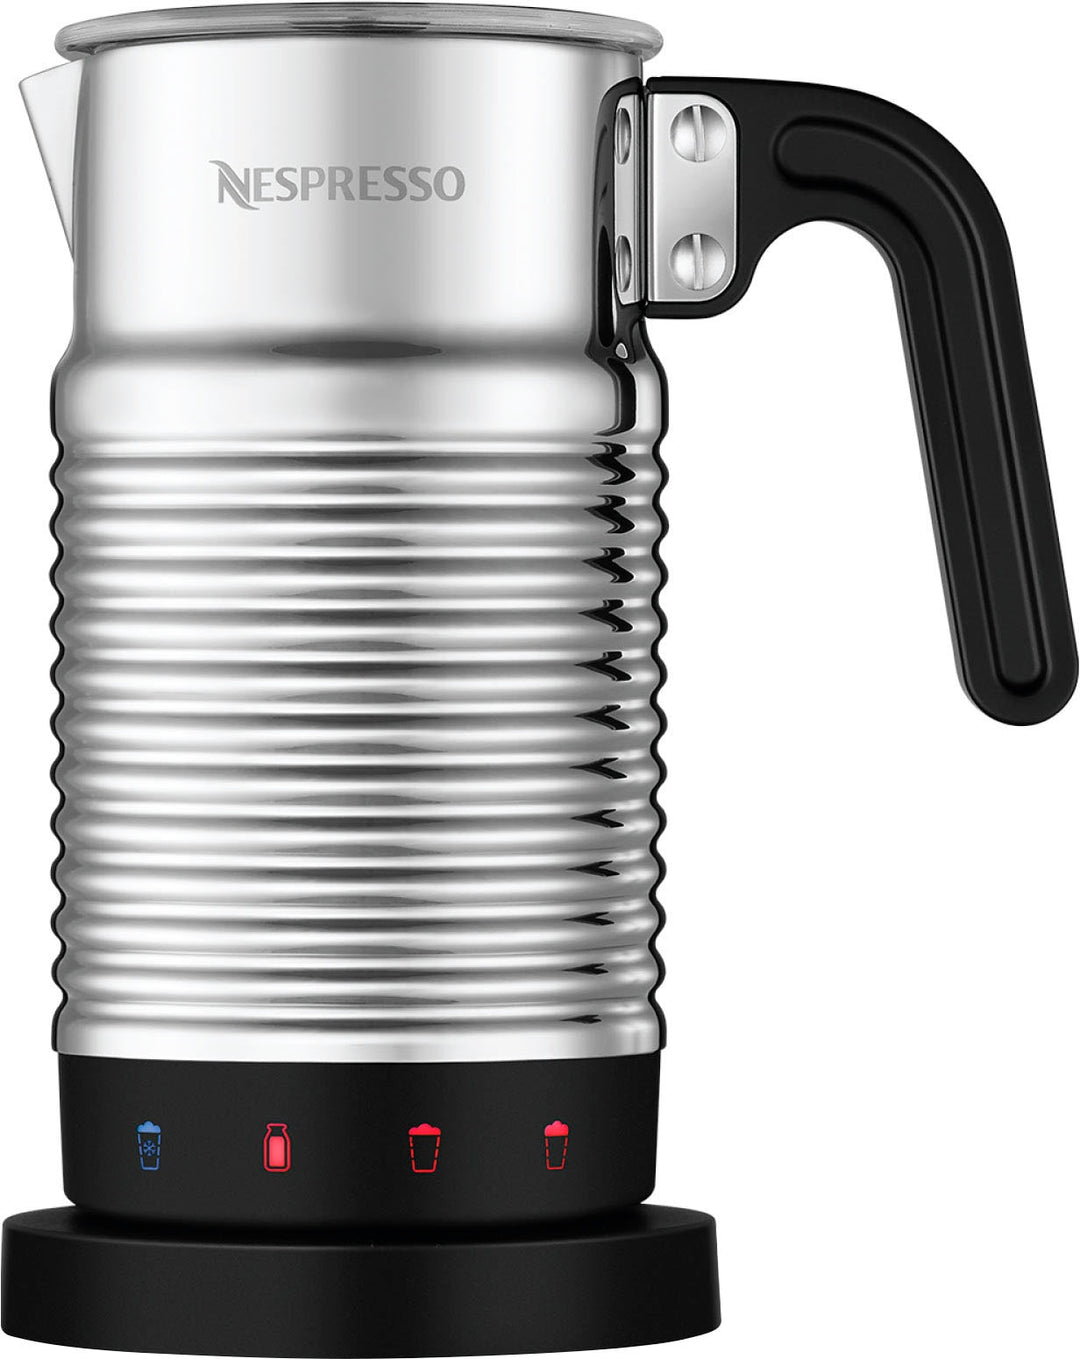 Nespresso Aeroccino 4 Milk Frother - Stainless Steel_1